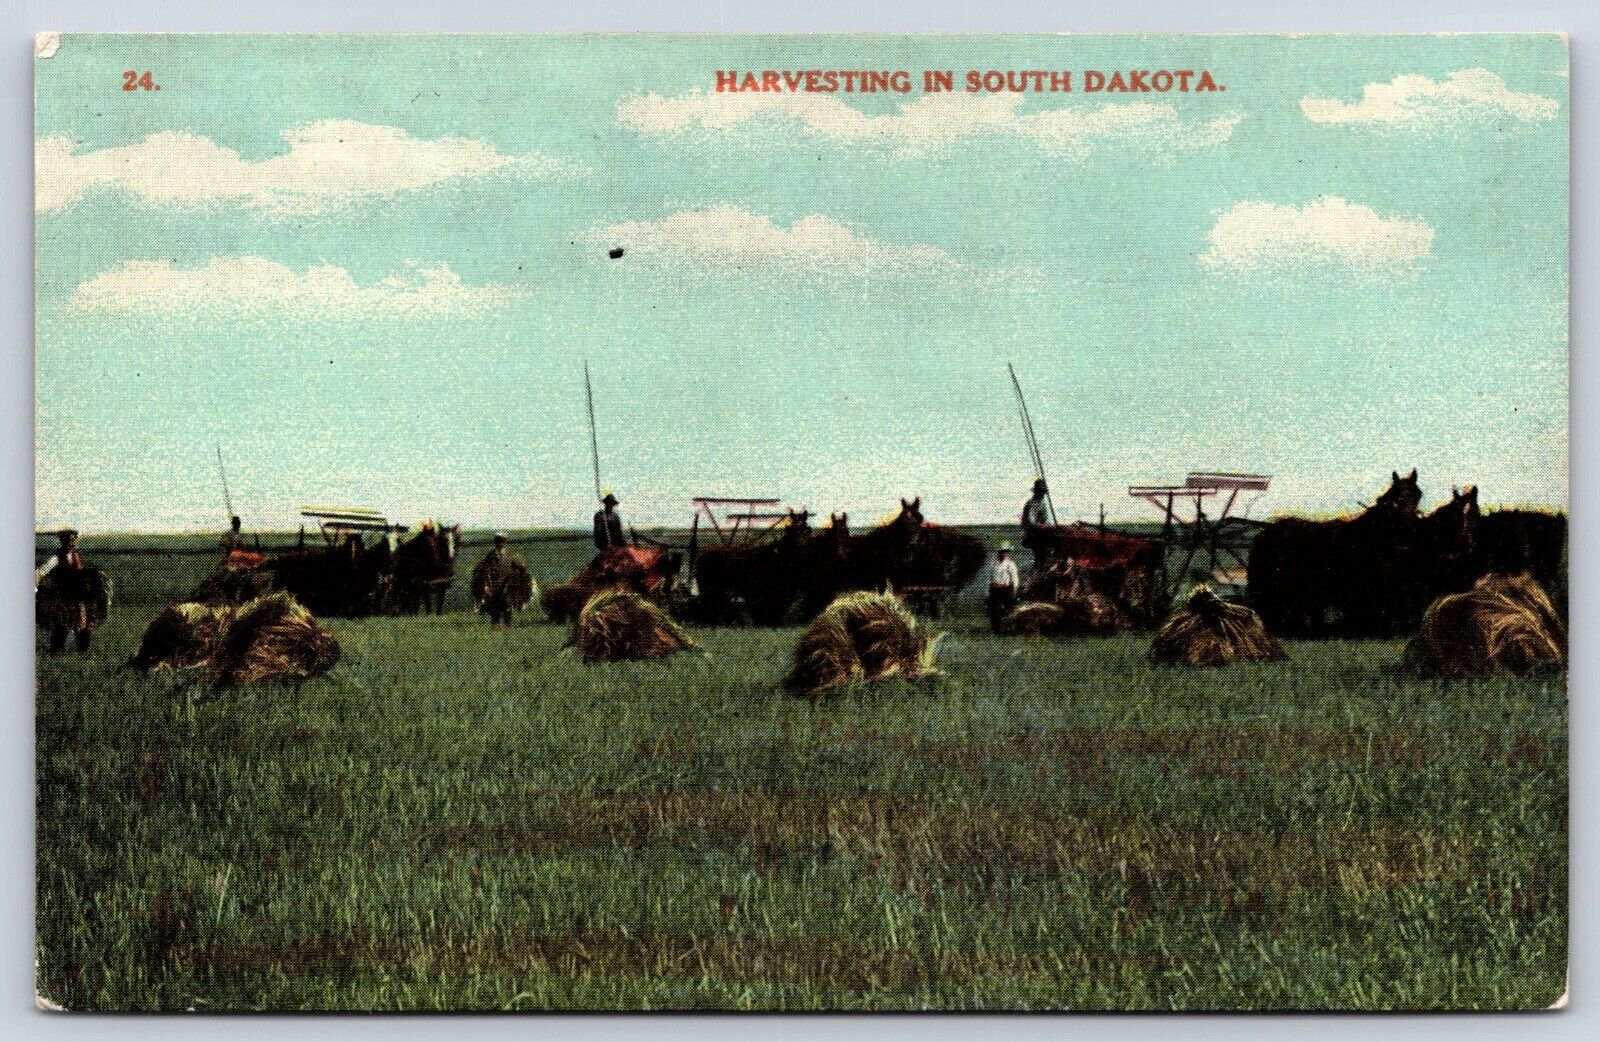 South Dakota Harvesting Farm Work  Vintage Postcard